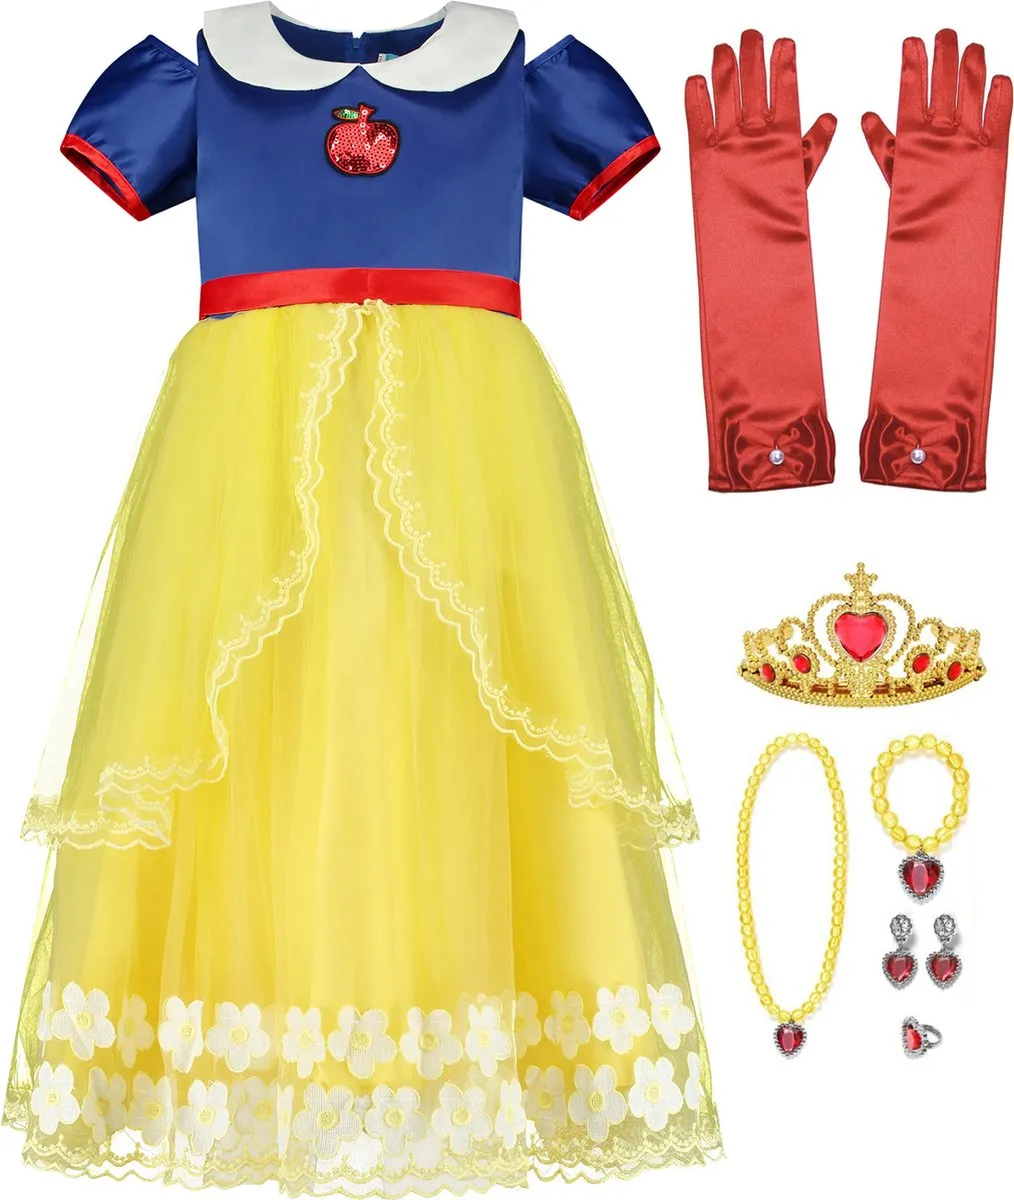 Prinsessenjurk meisje - Sneeuwwitje  - Verkleedjurk met rode cape - 104/110 (110) - Prinsessen Speelgoed speelgoed